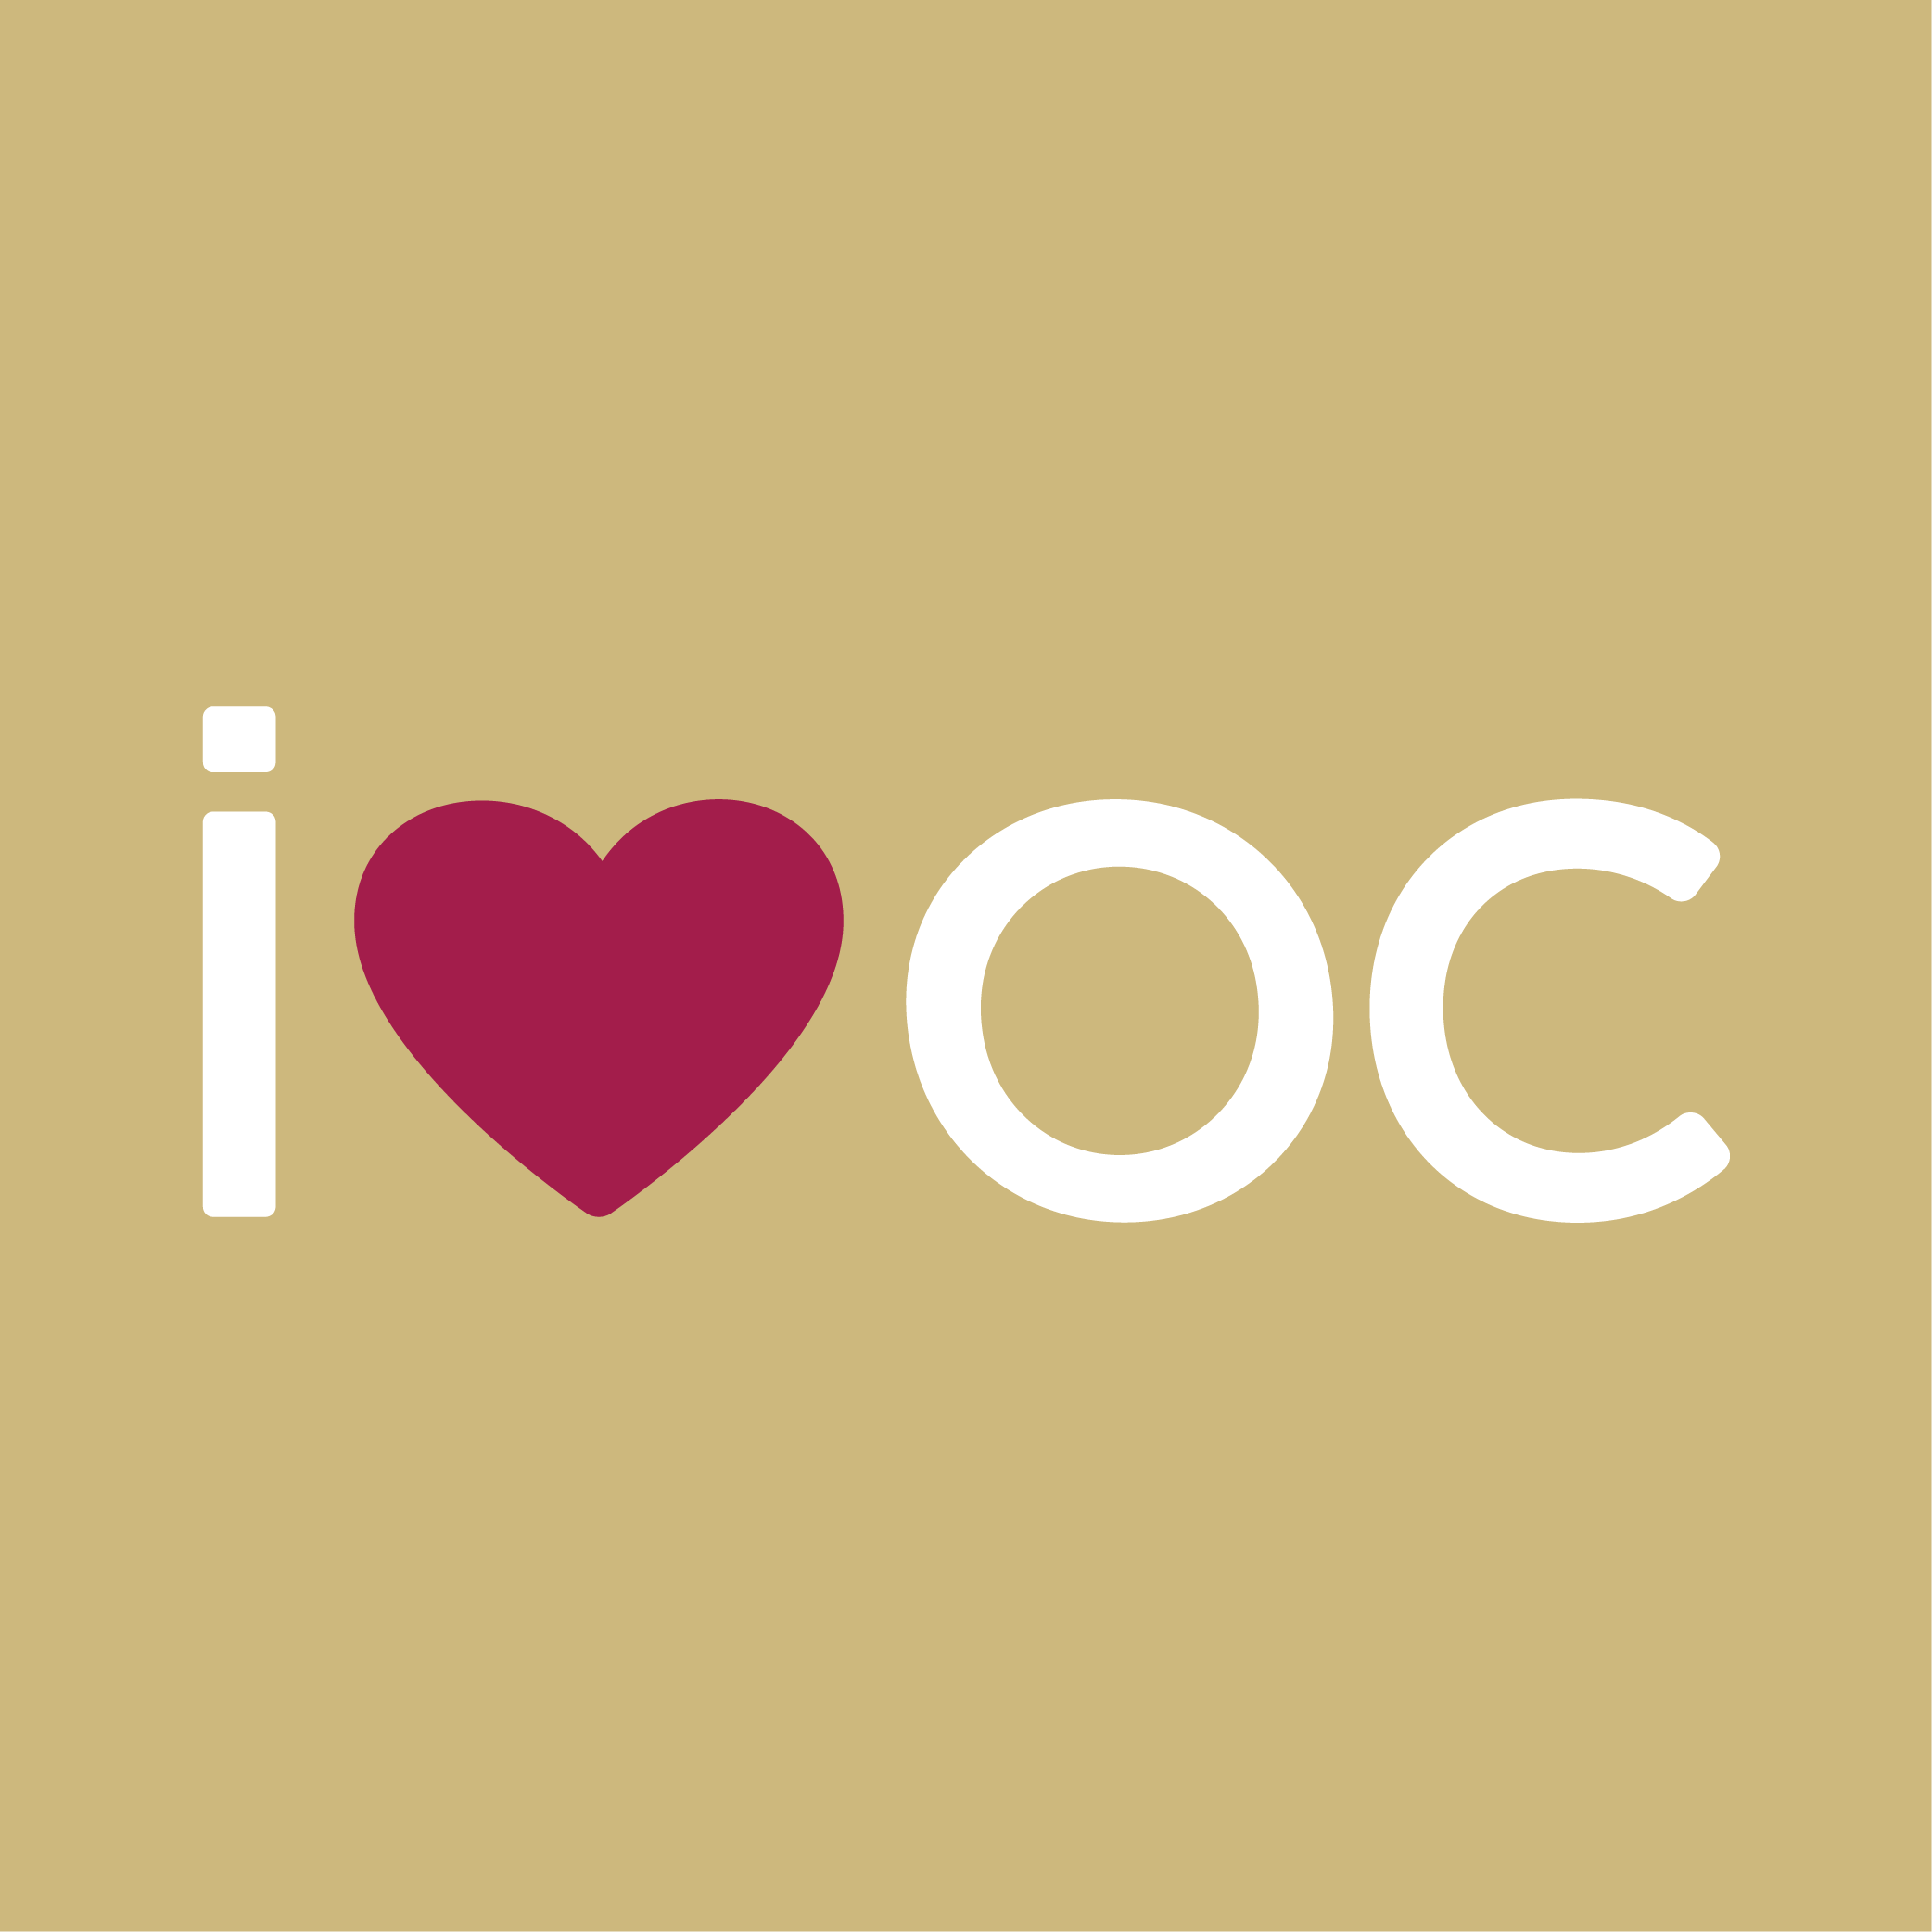 OCCF Celebrates $20 Million Milestone for iheartoc Giving Days